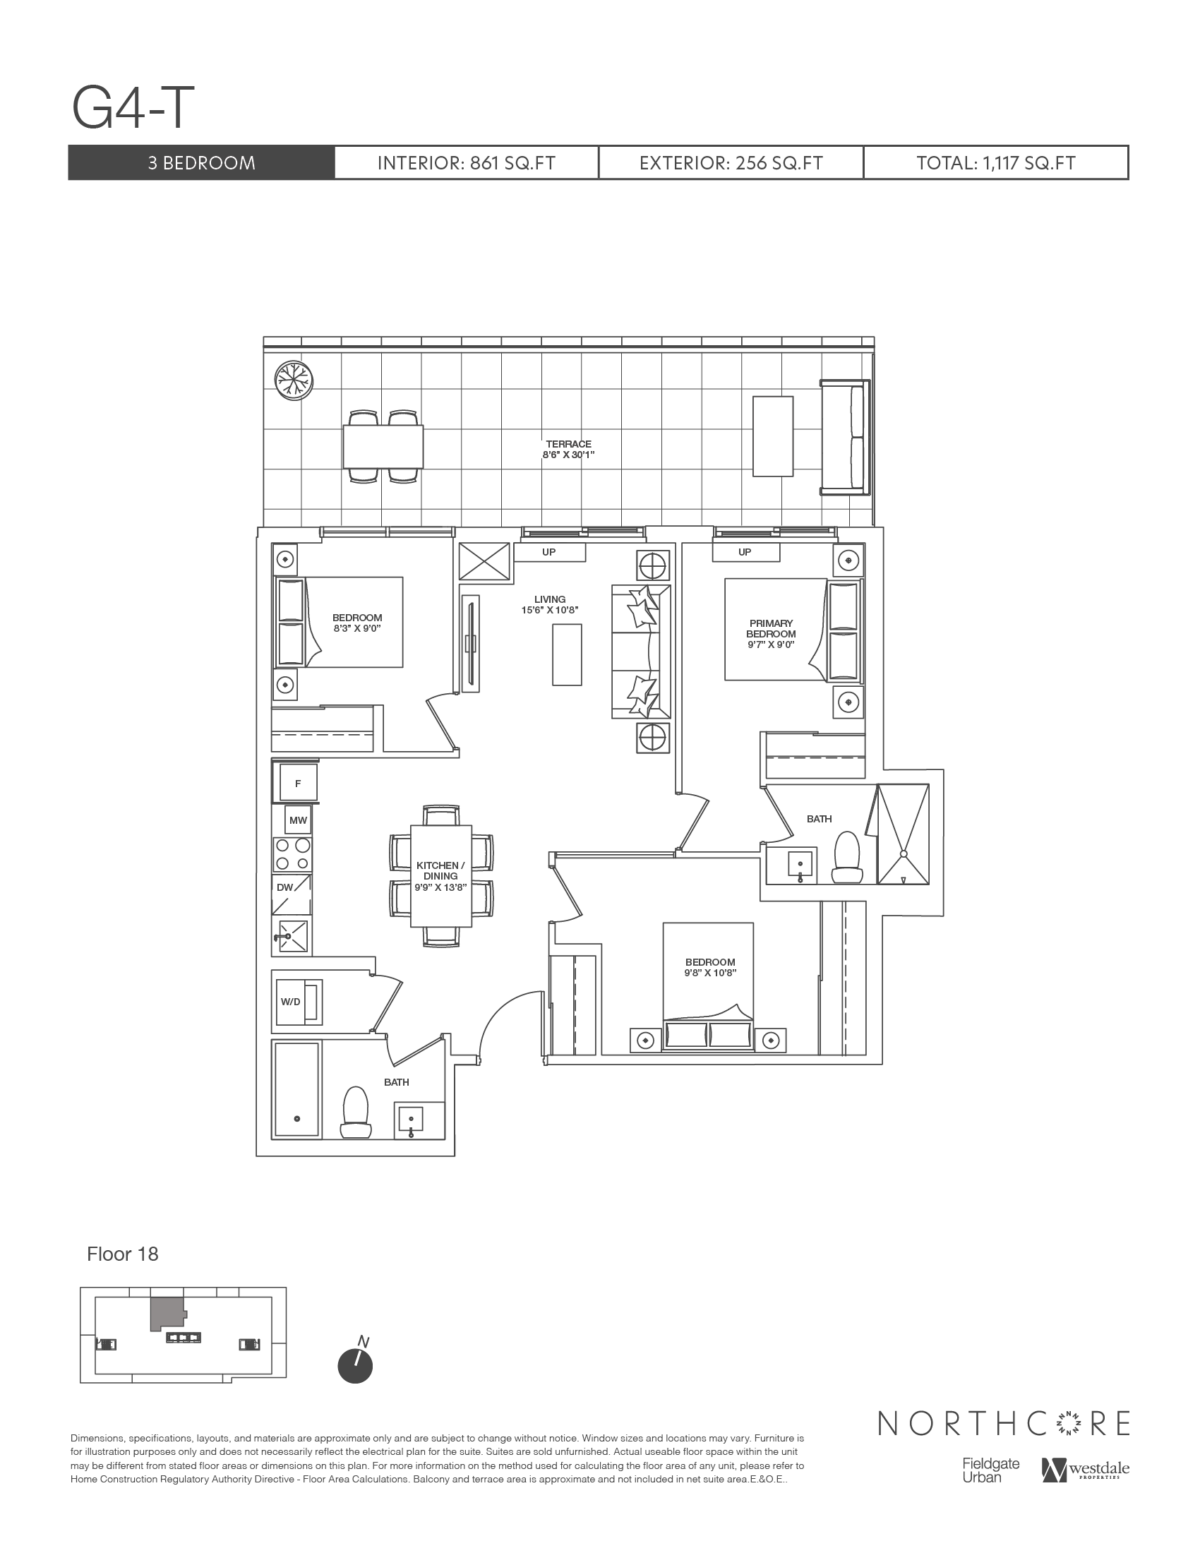 G4-T floorplan